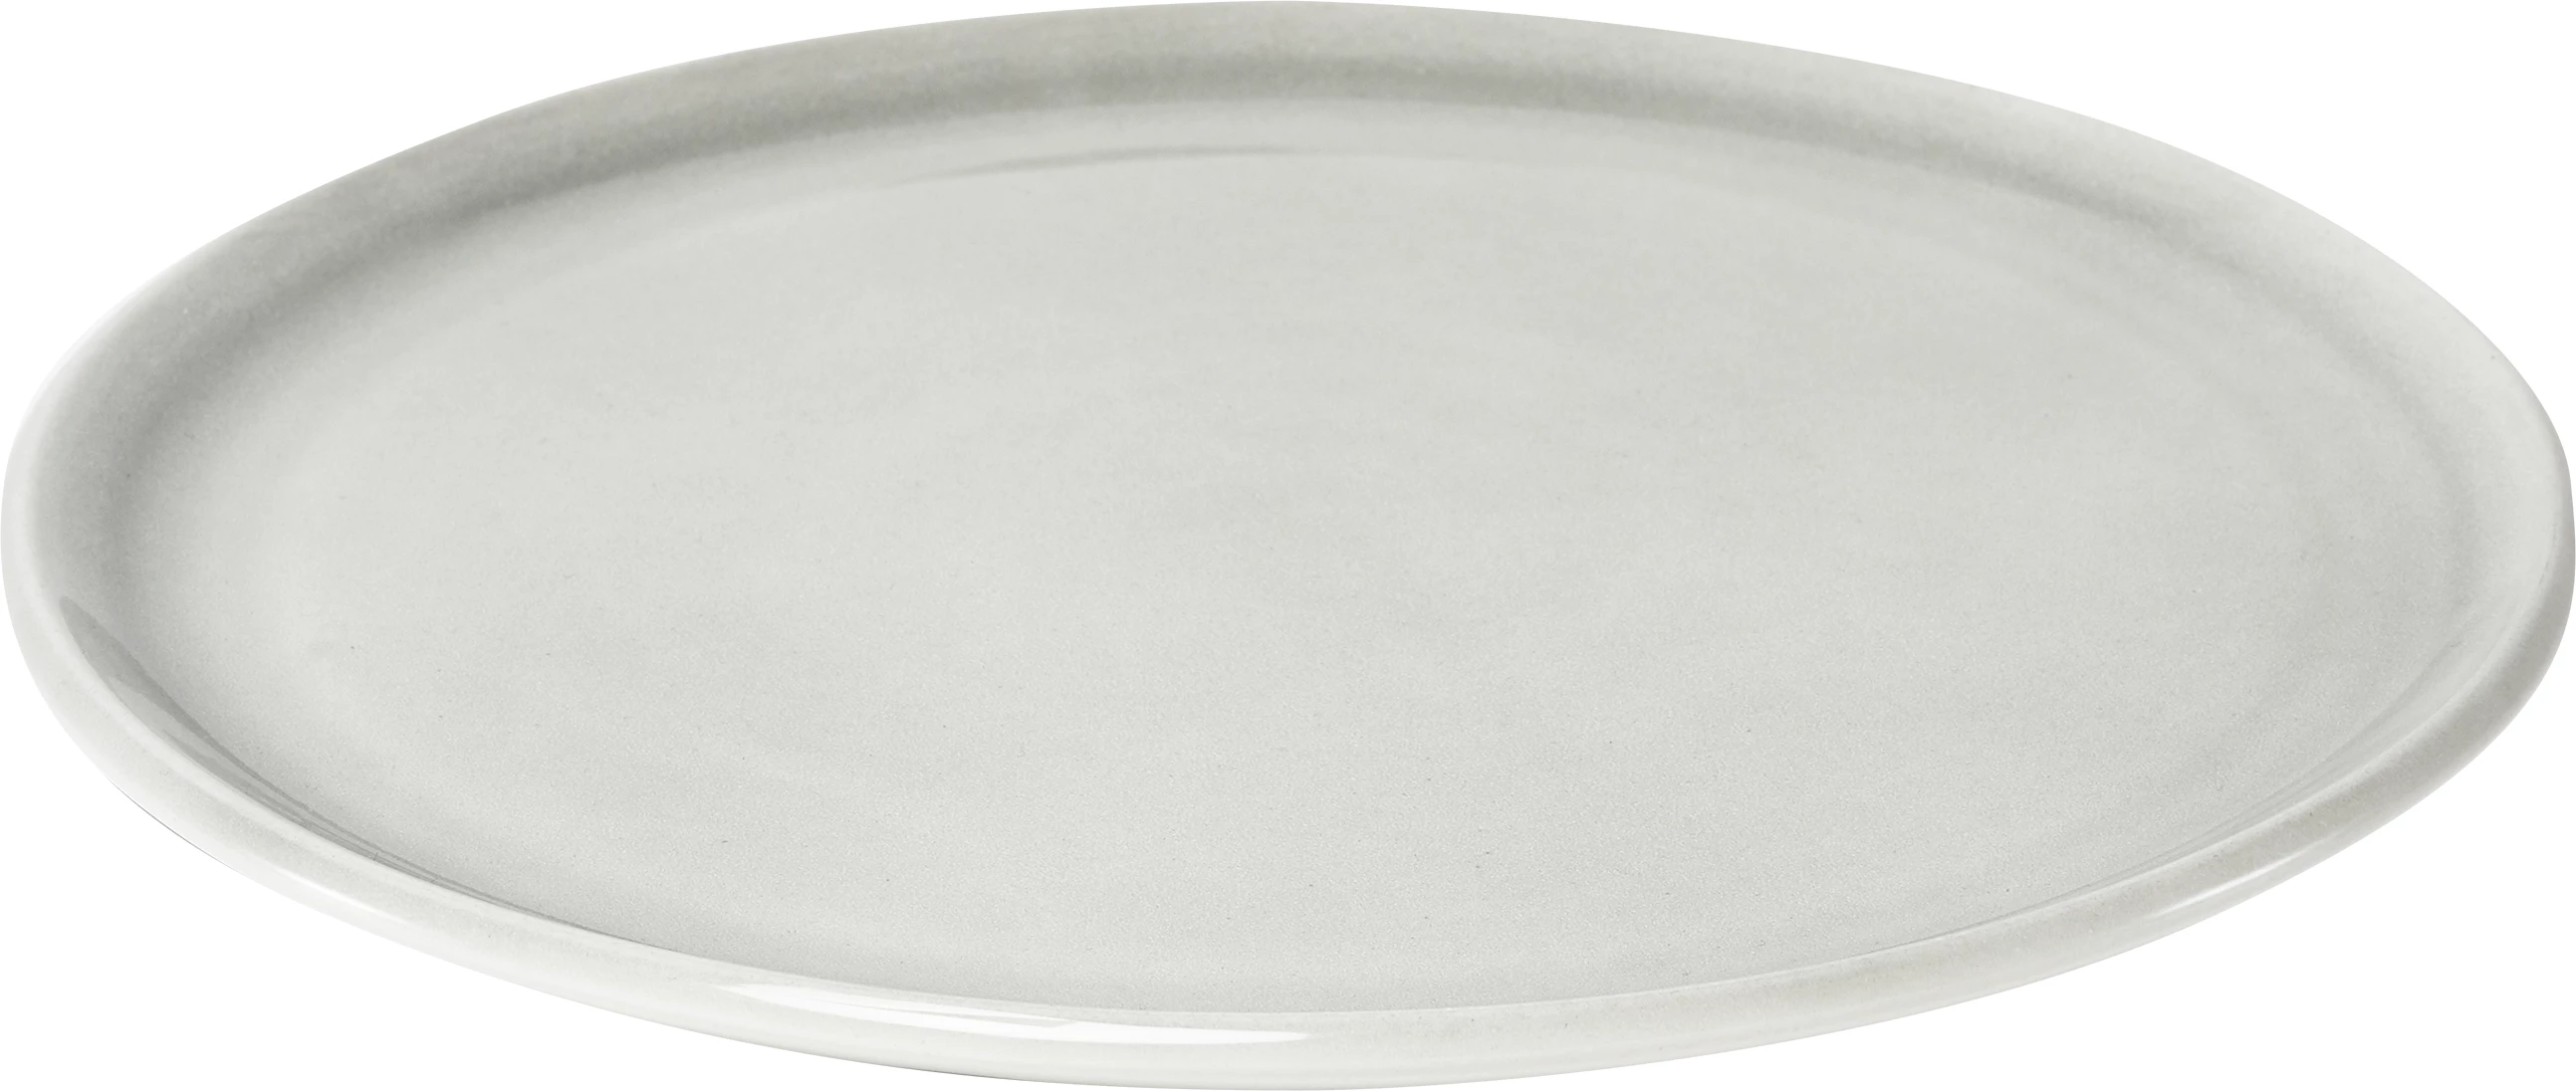 Figgjo Pax tallerken, flad, grå, ø24 cm